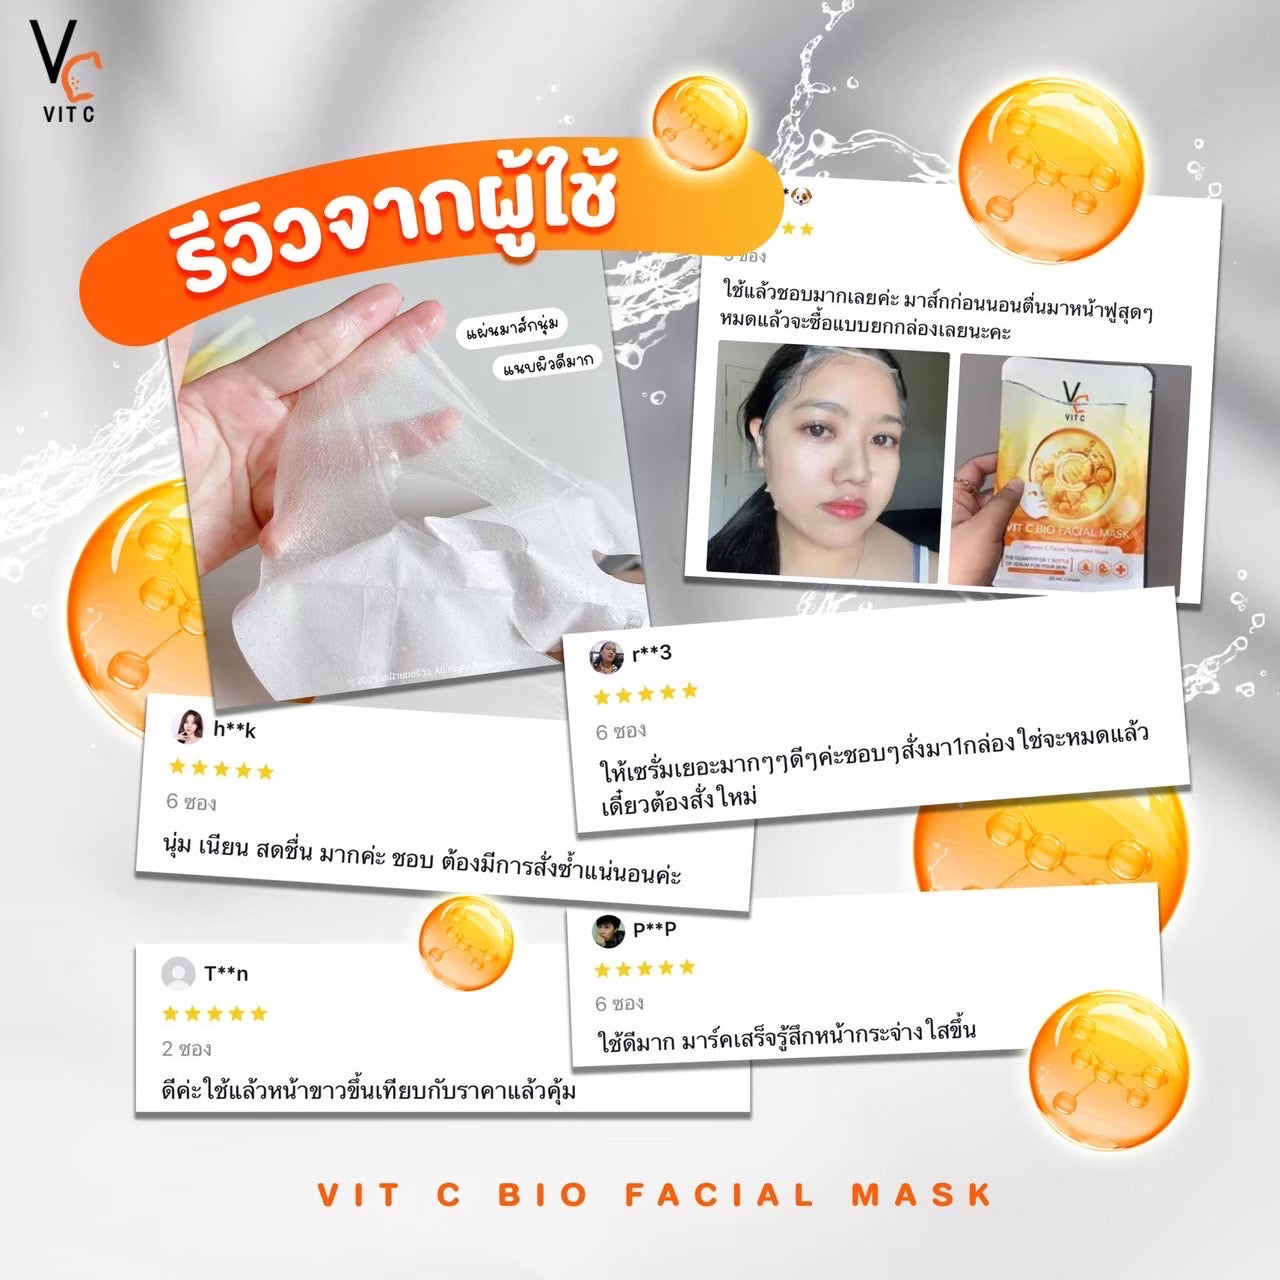 Vit C Bio Facial Mask